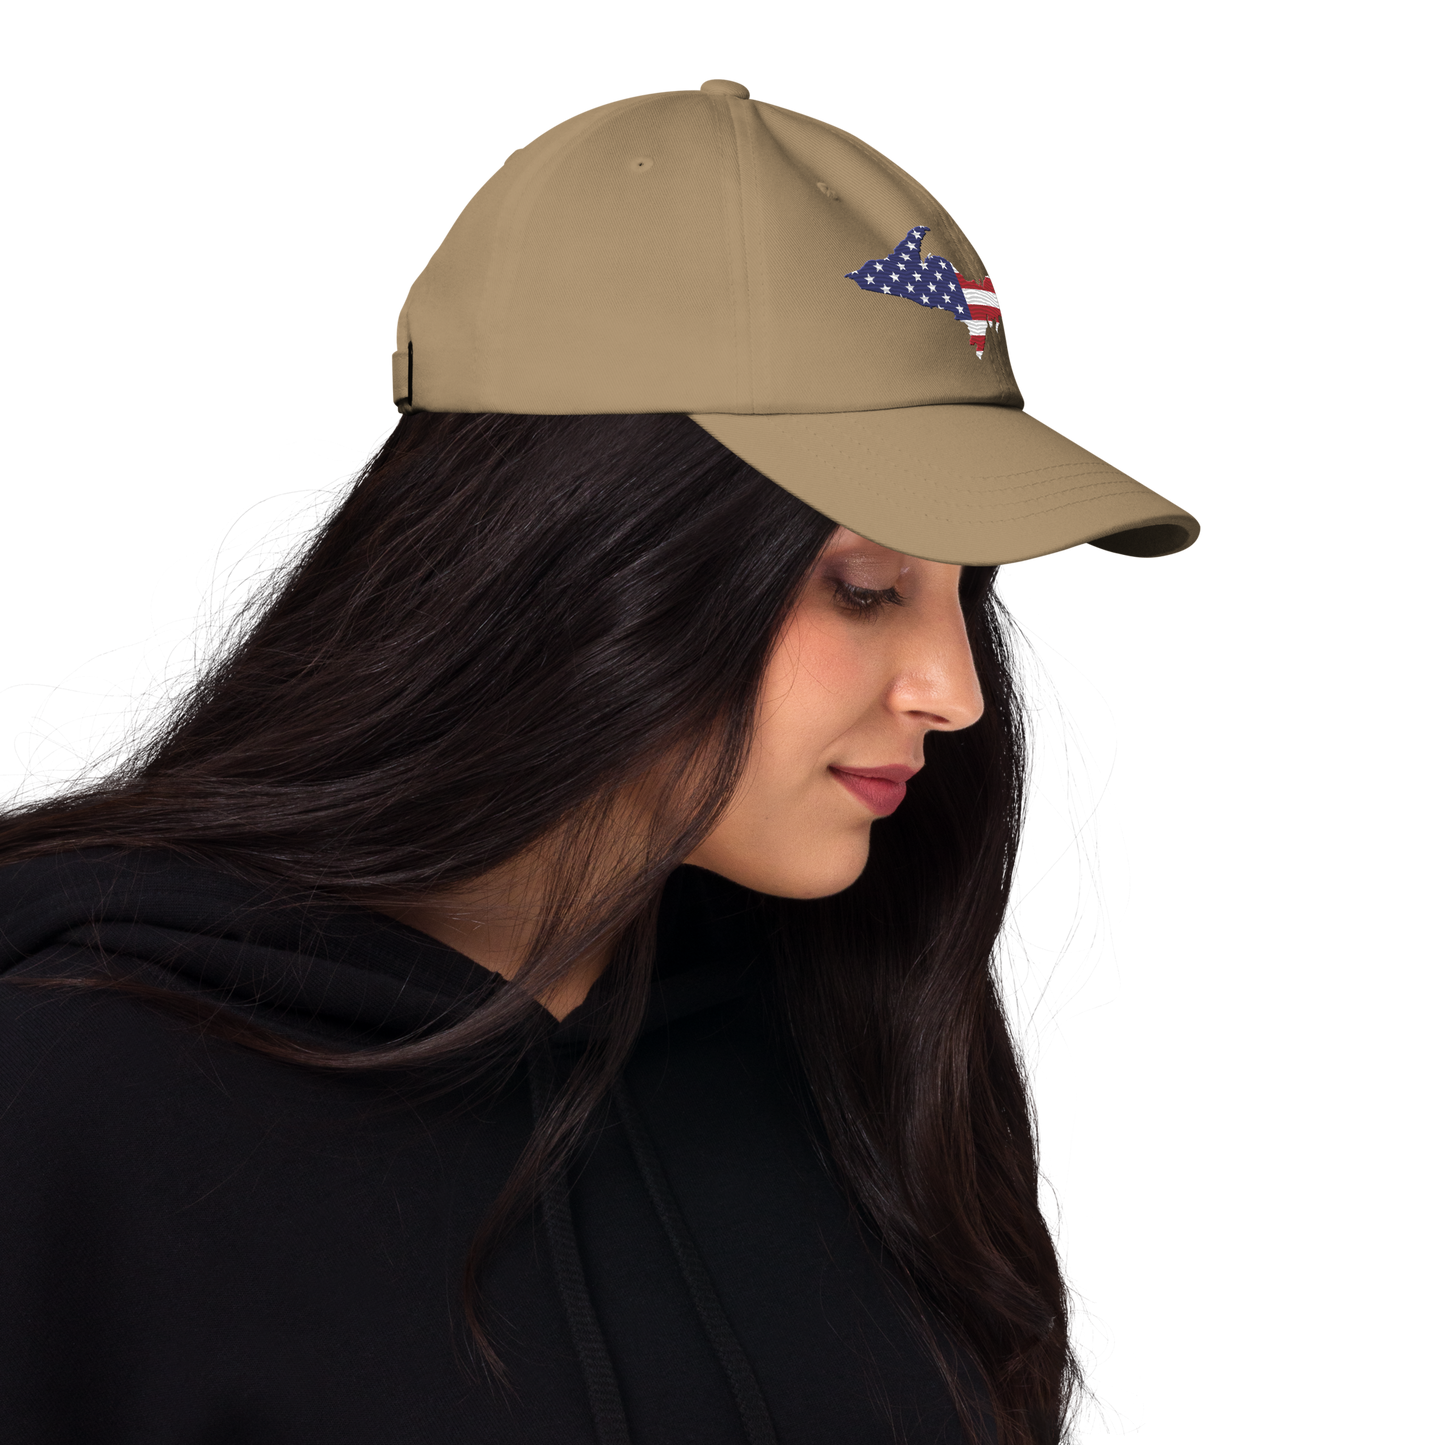 Michigan Upper Peninsula Dad Hat (Patriot Edition)